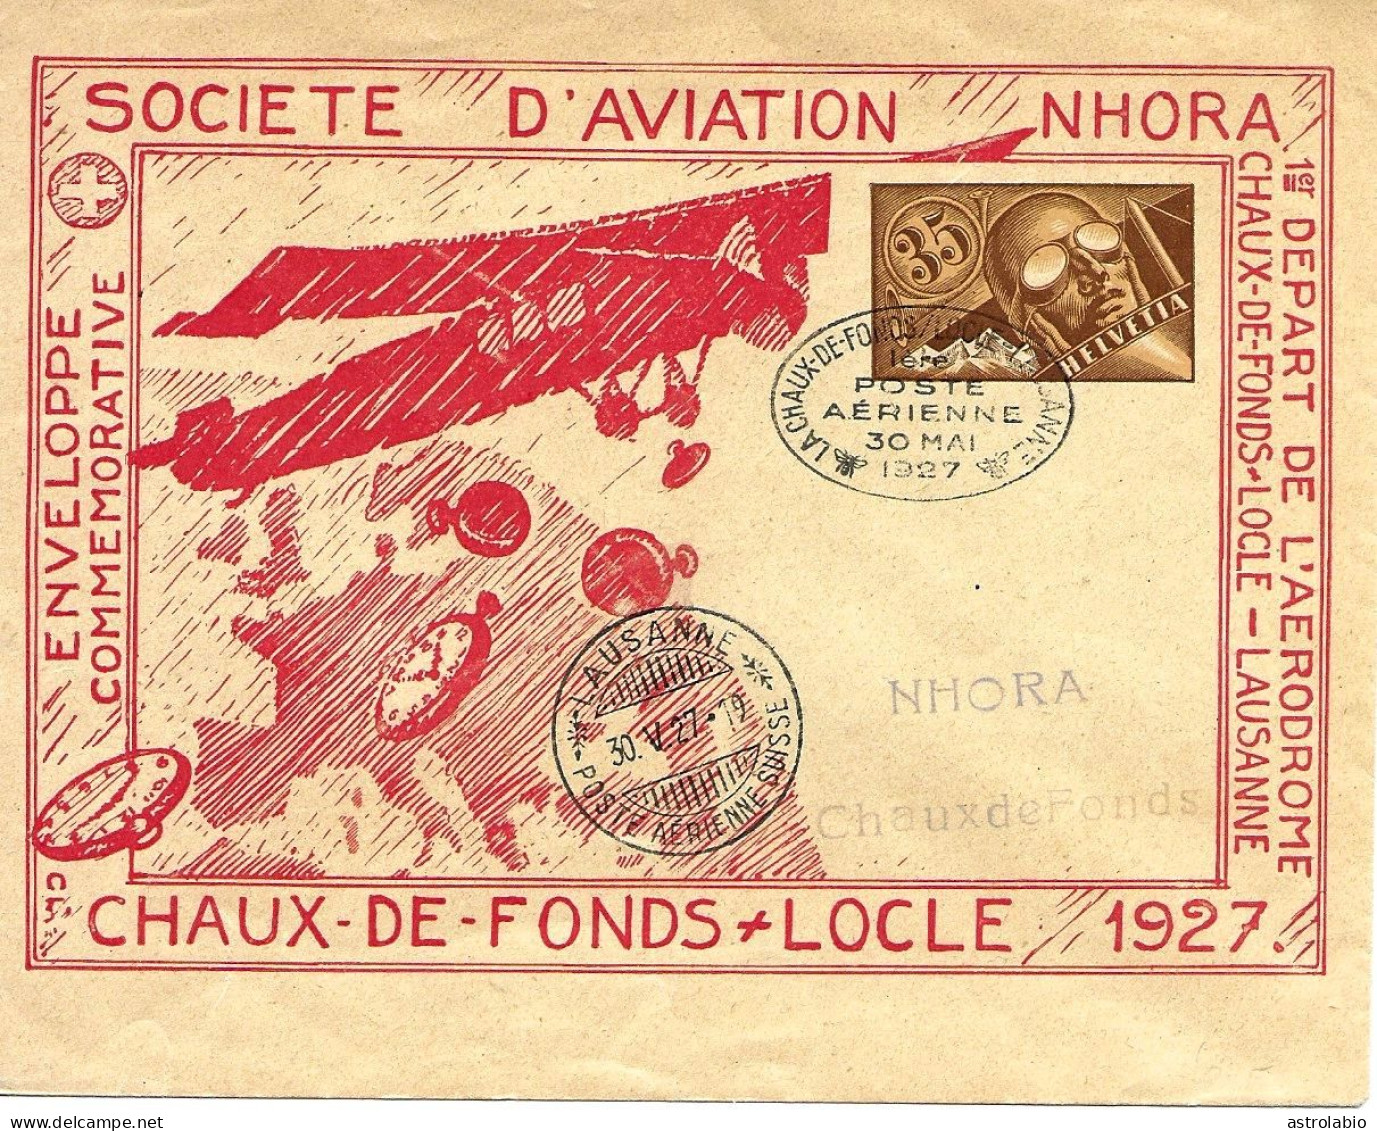 Navigation Horlogère Aérienne NHORA Suisse 1927, Entier Postal-enveloppe, Carte Voyagée - Relojería